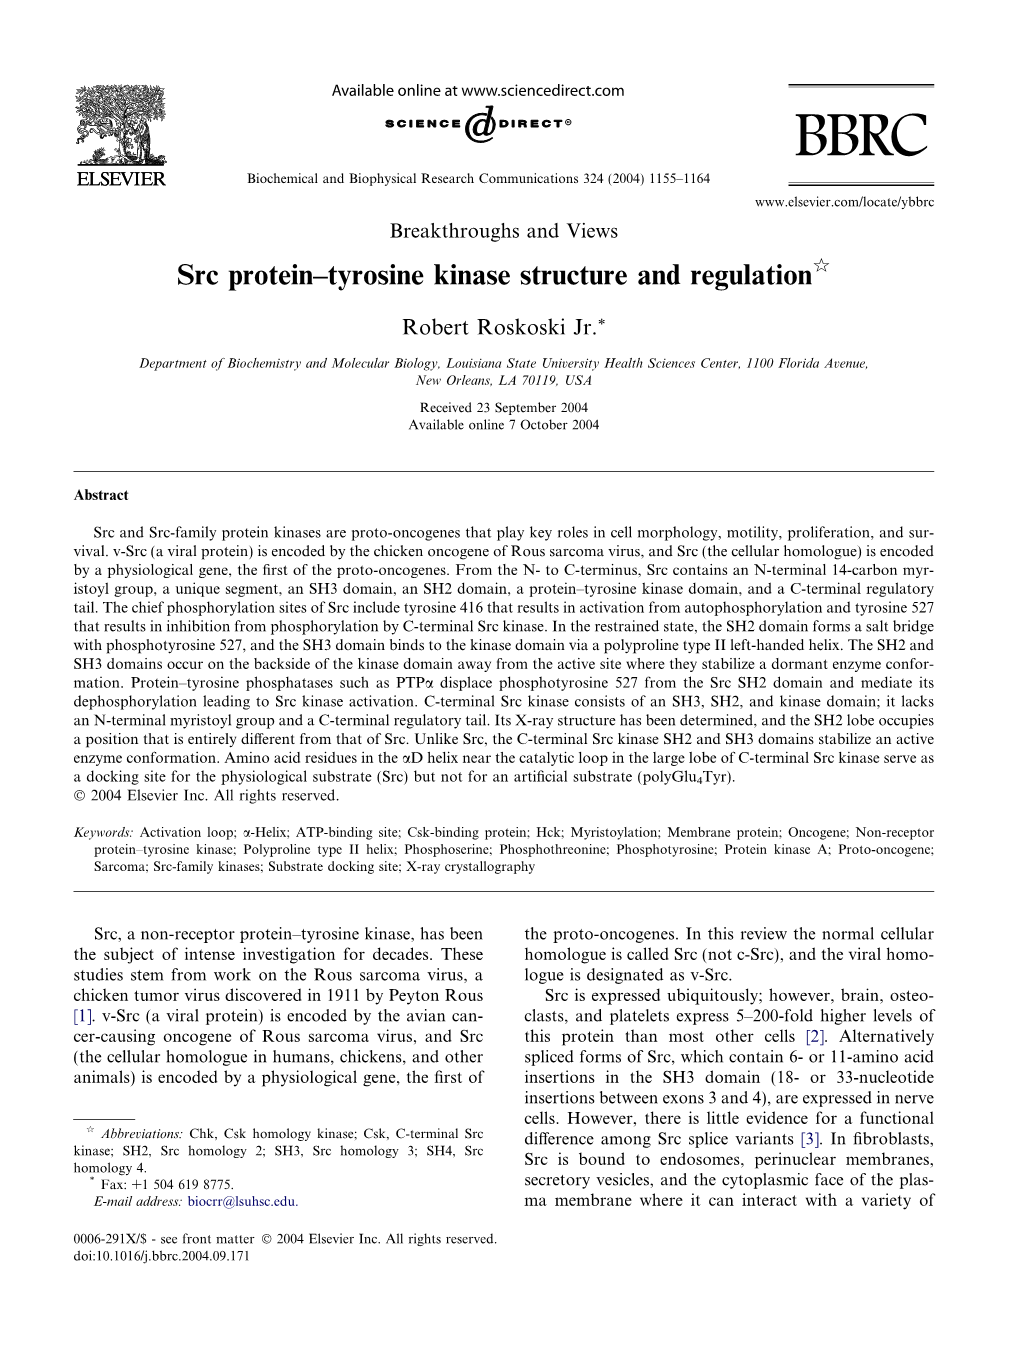 Src Protein–Tyrosine Kinase Structure and Regulationq